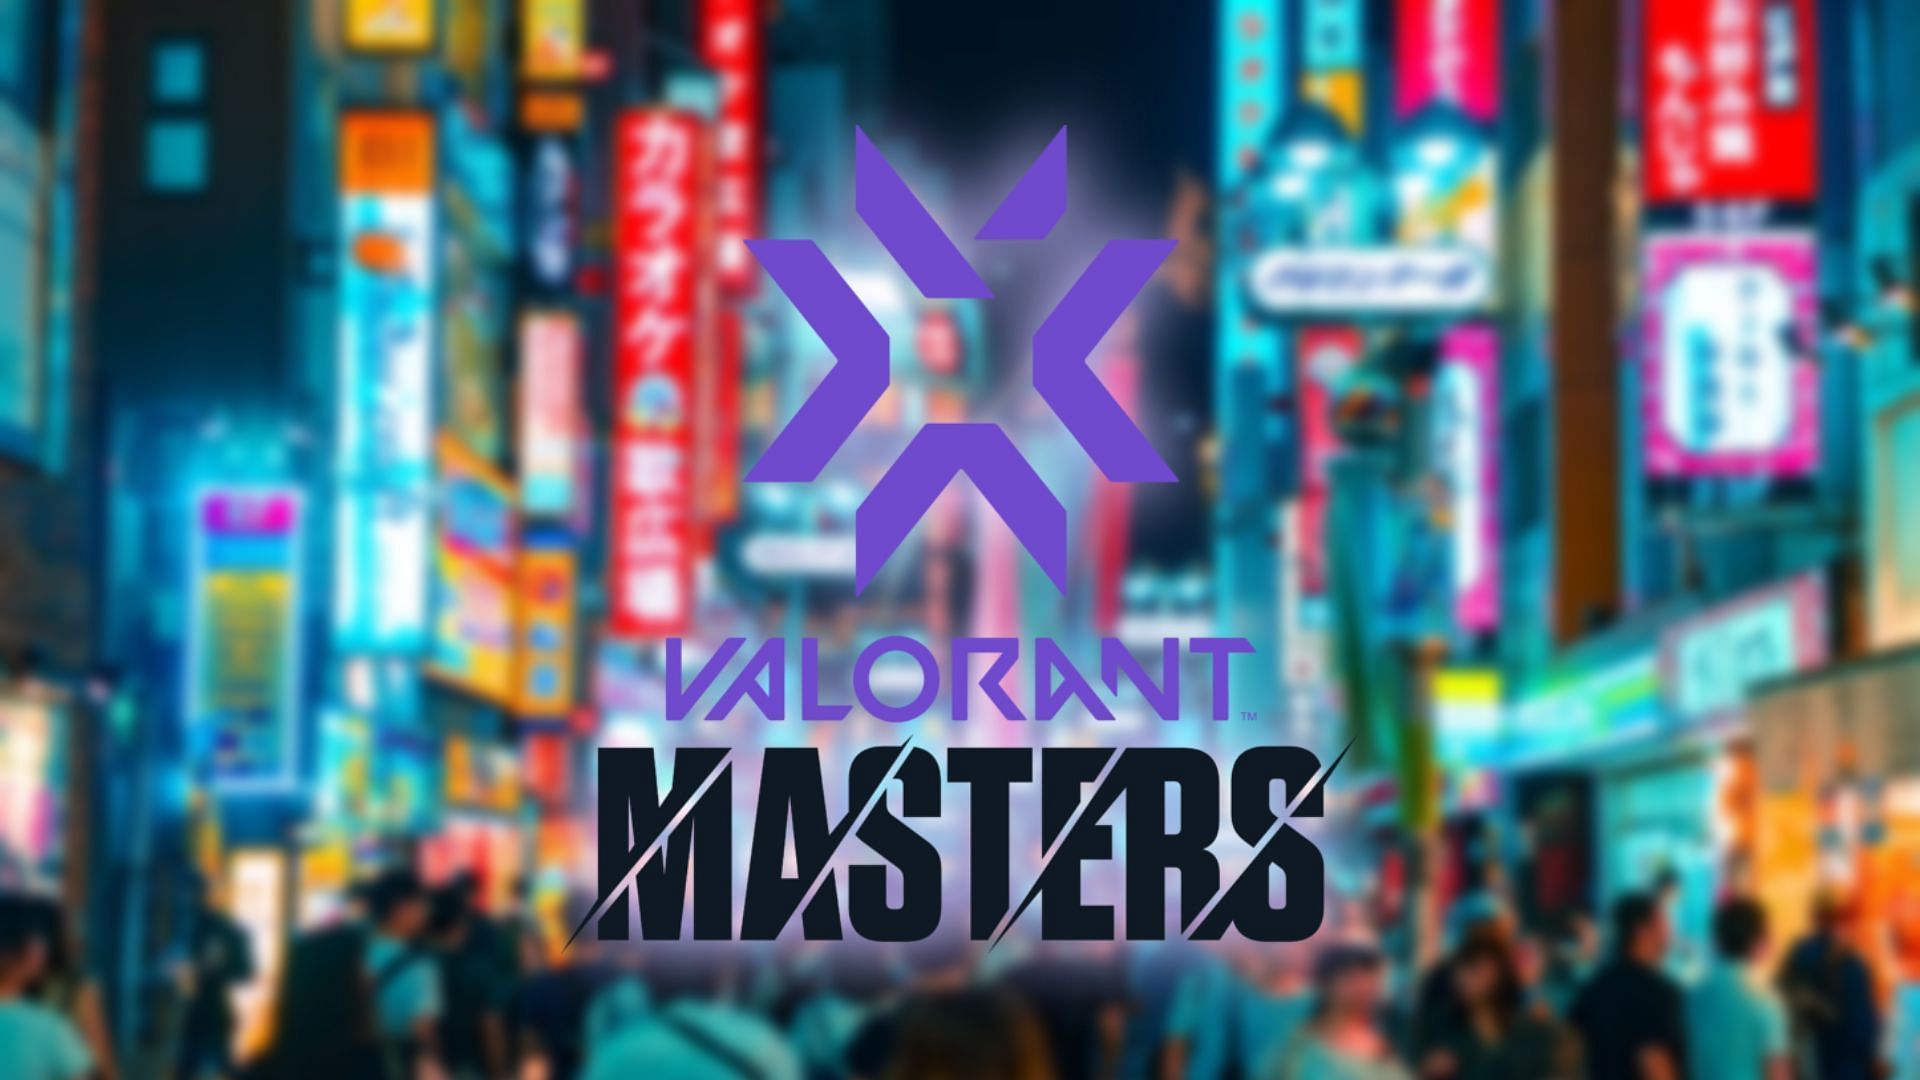 VCT Masters Tokyo team distribution has been announced. (Image via Sportskeeda)